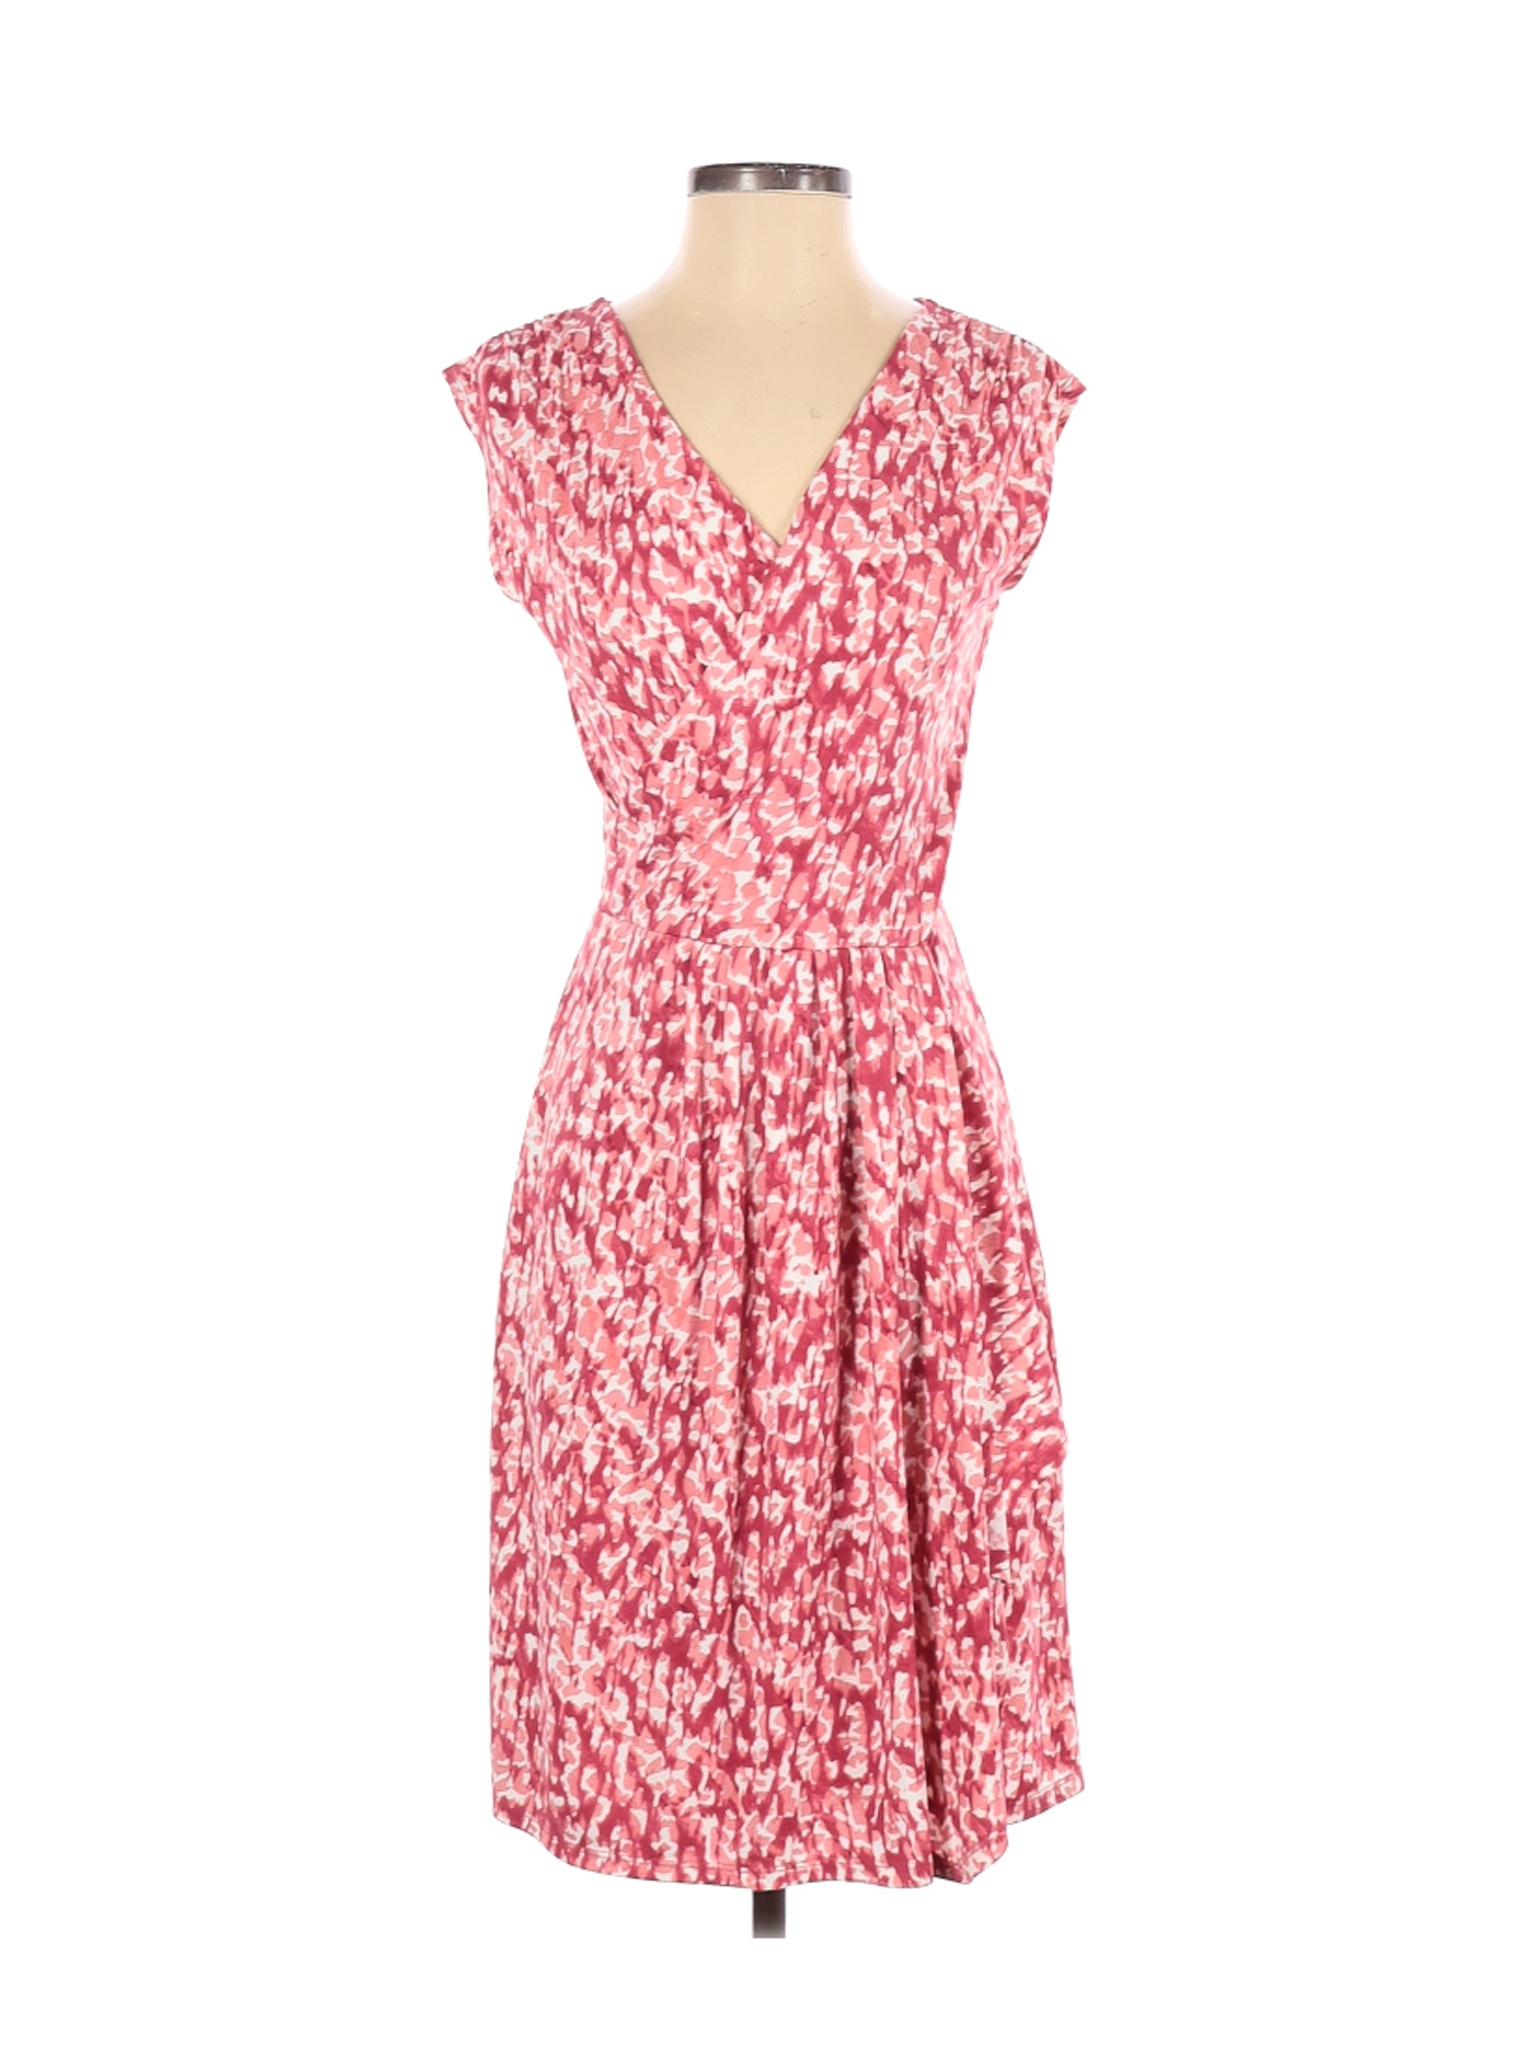 Anne Klein Women Pink Casual Dress S | eBay